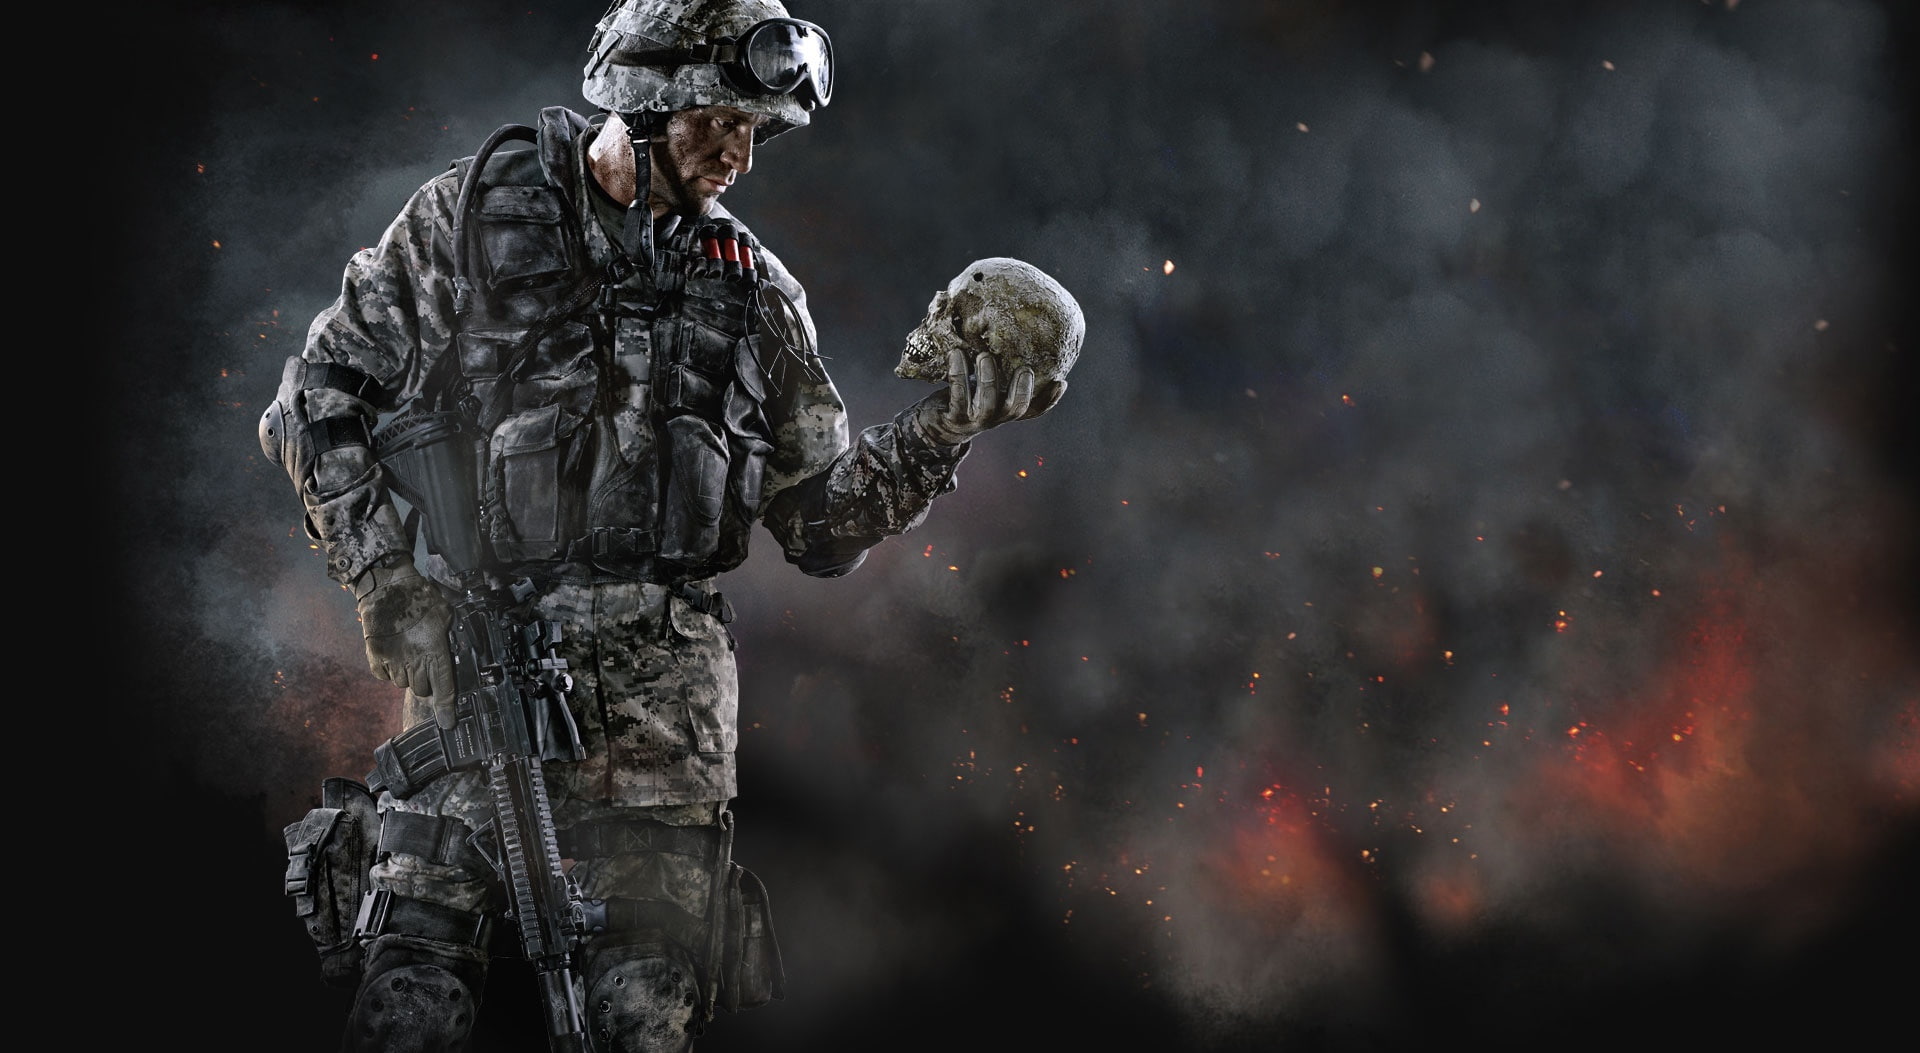 Warface HD Wallpaper, man holding rifle and skul poster, Games